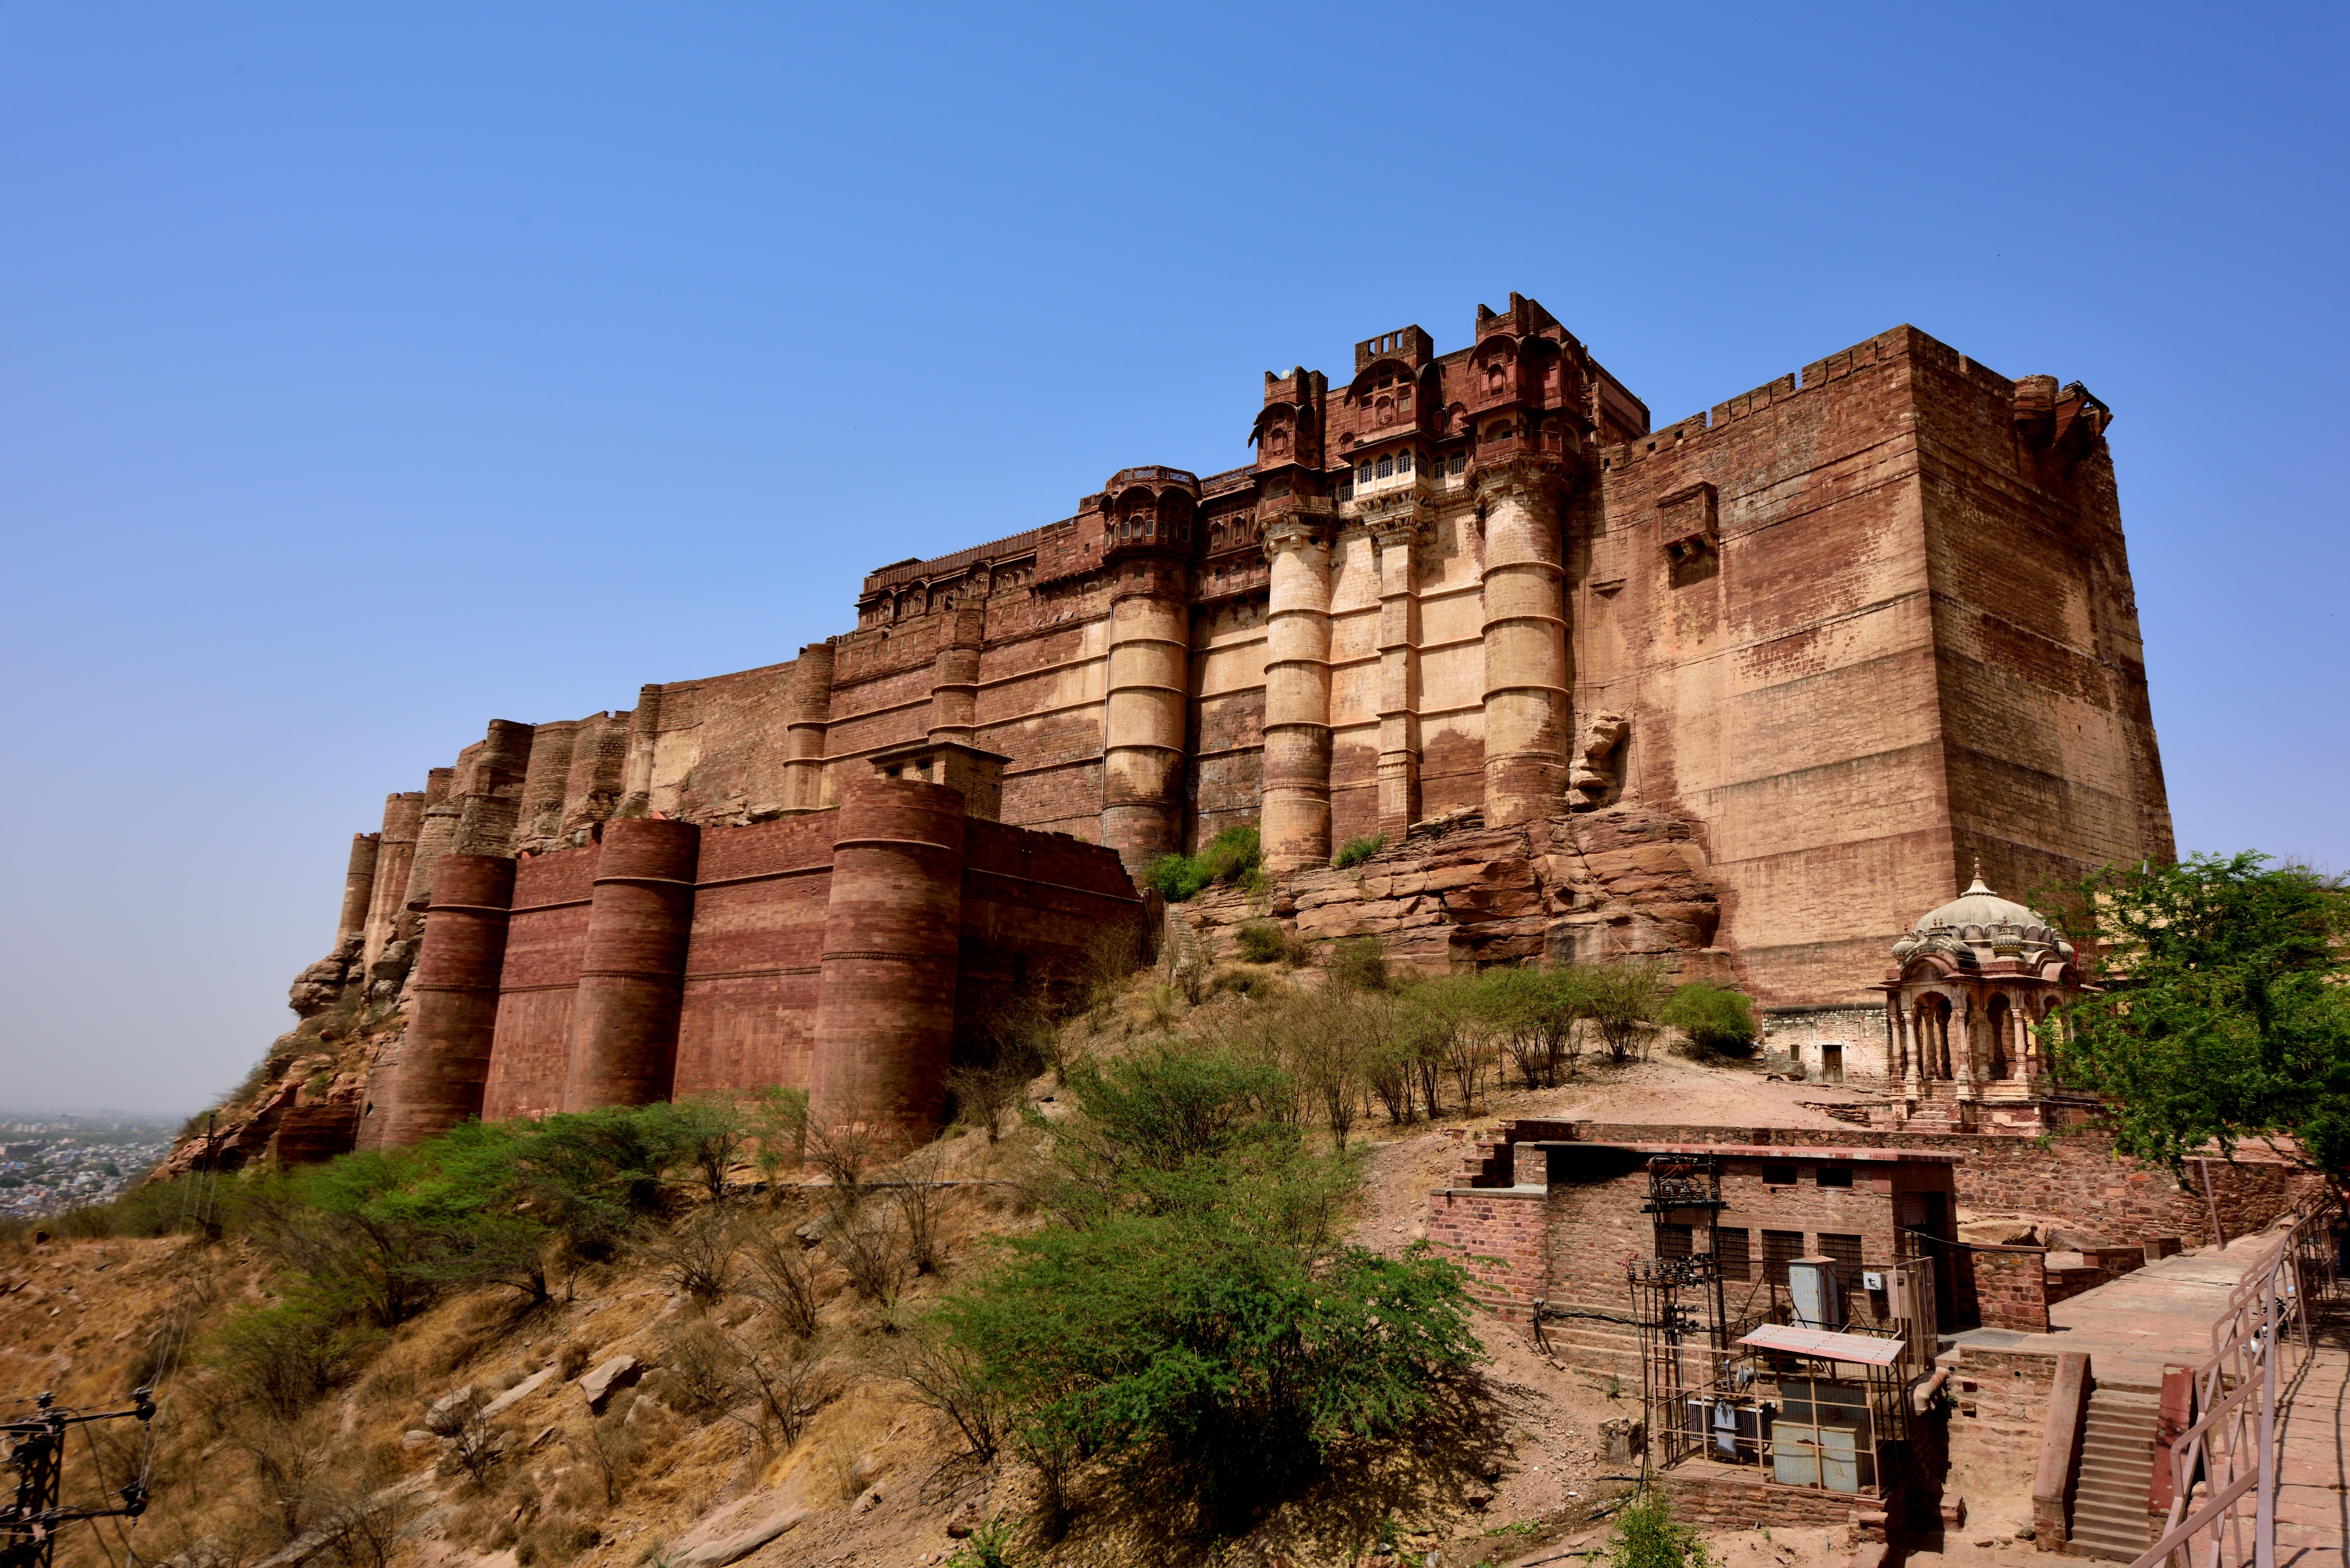 Merlin Garr Castle, India, Coke Puerta, history, travel destinations